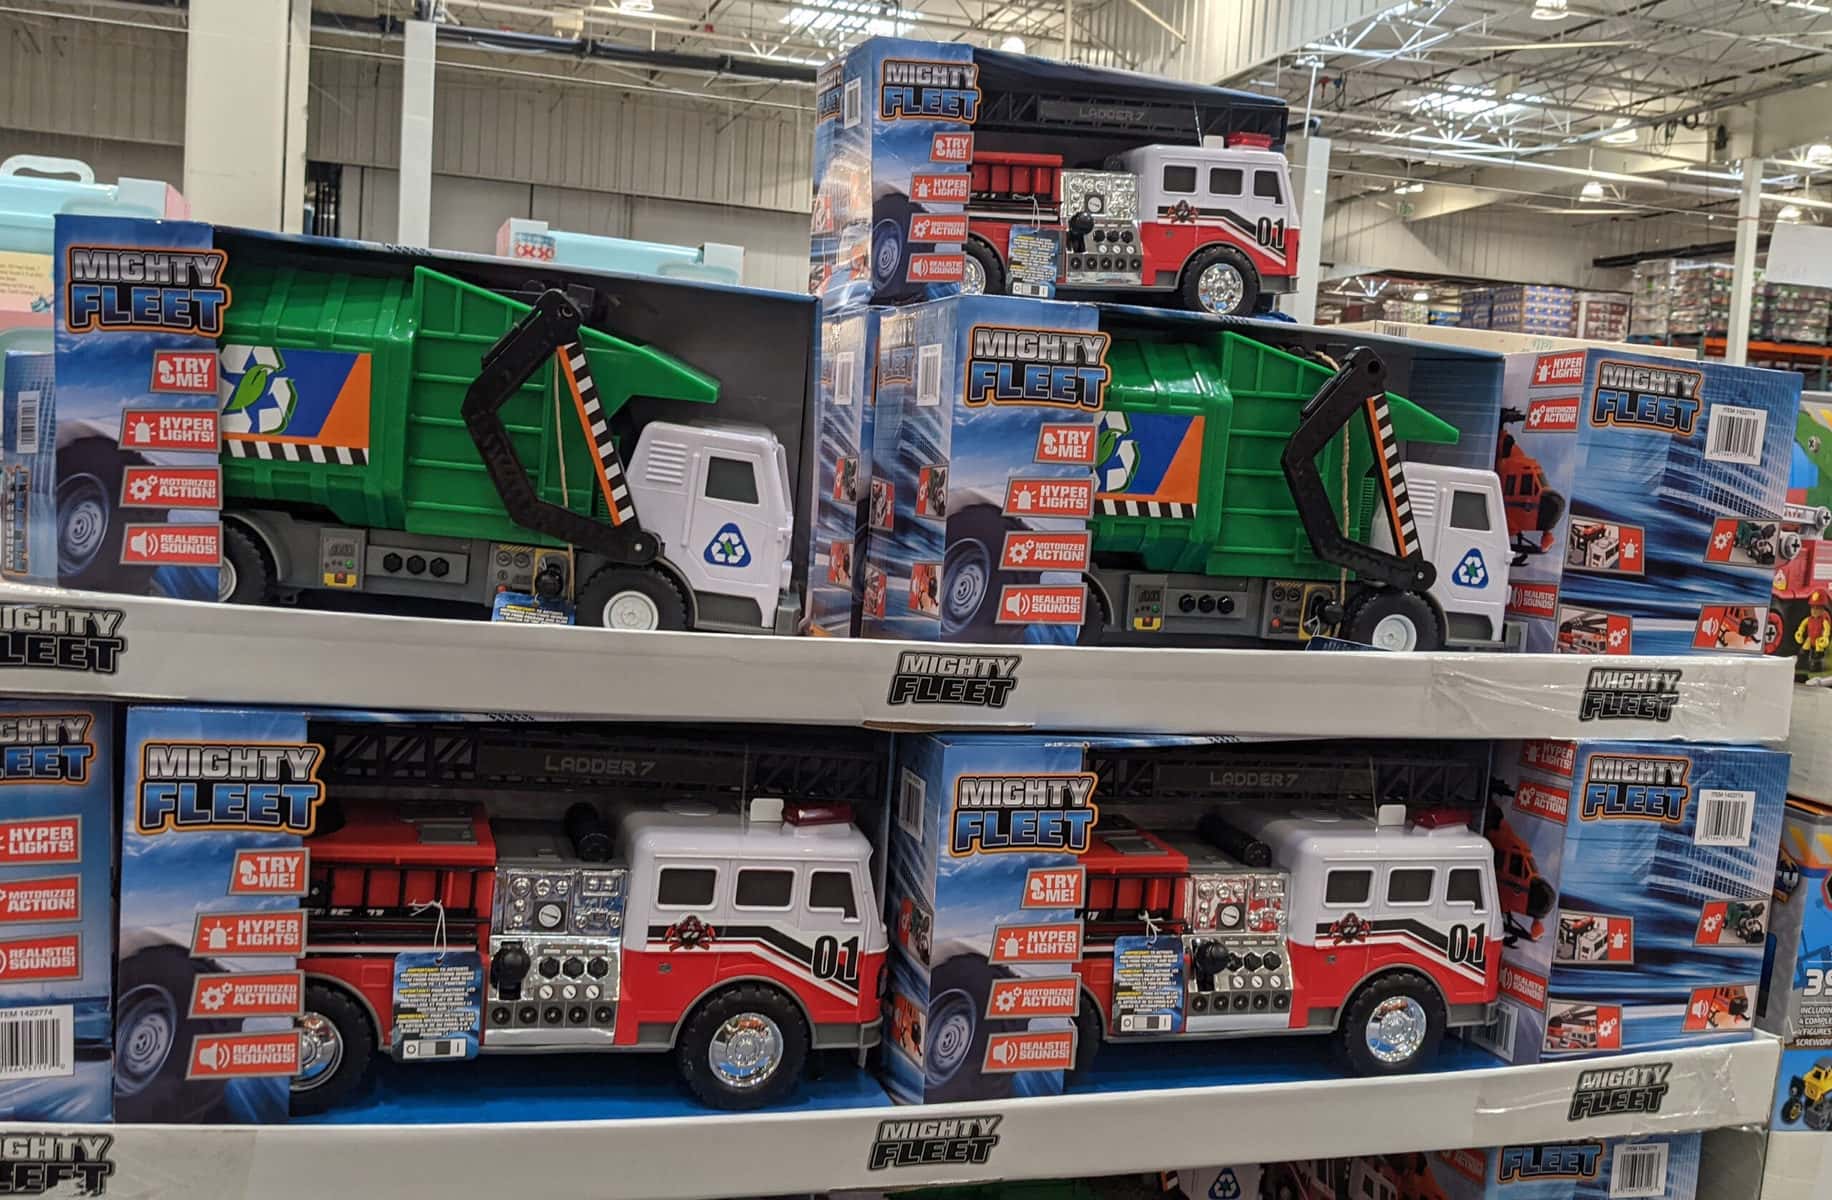 Mighty Fleet Trucks at Costco